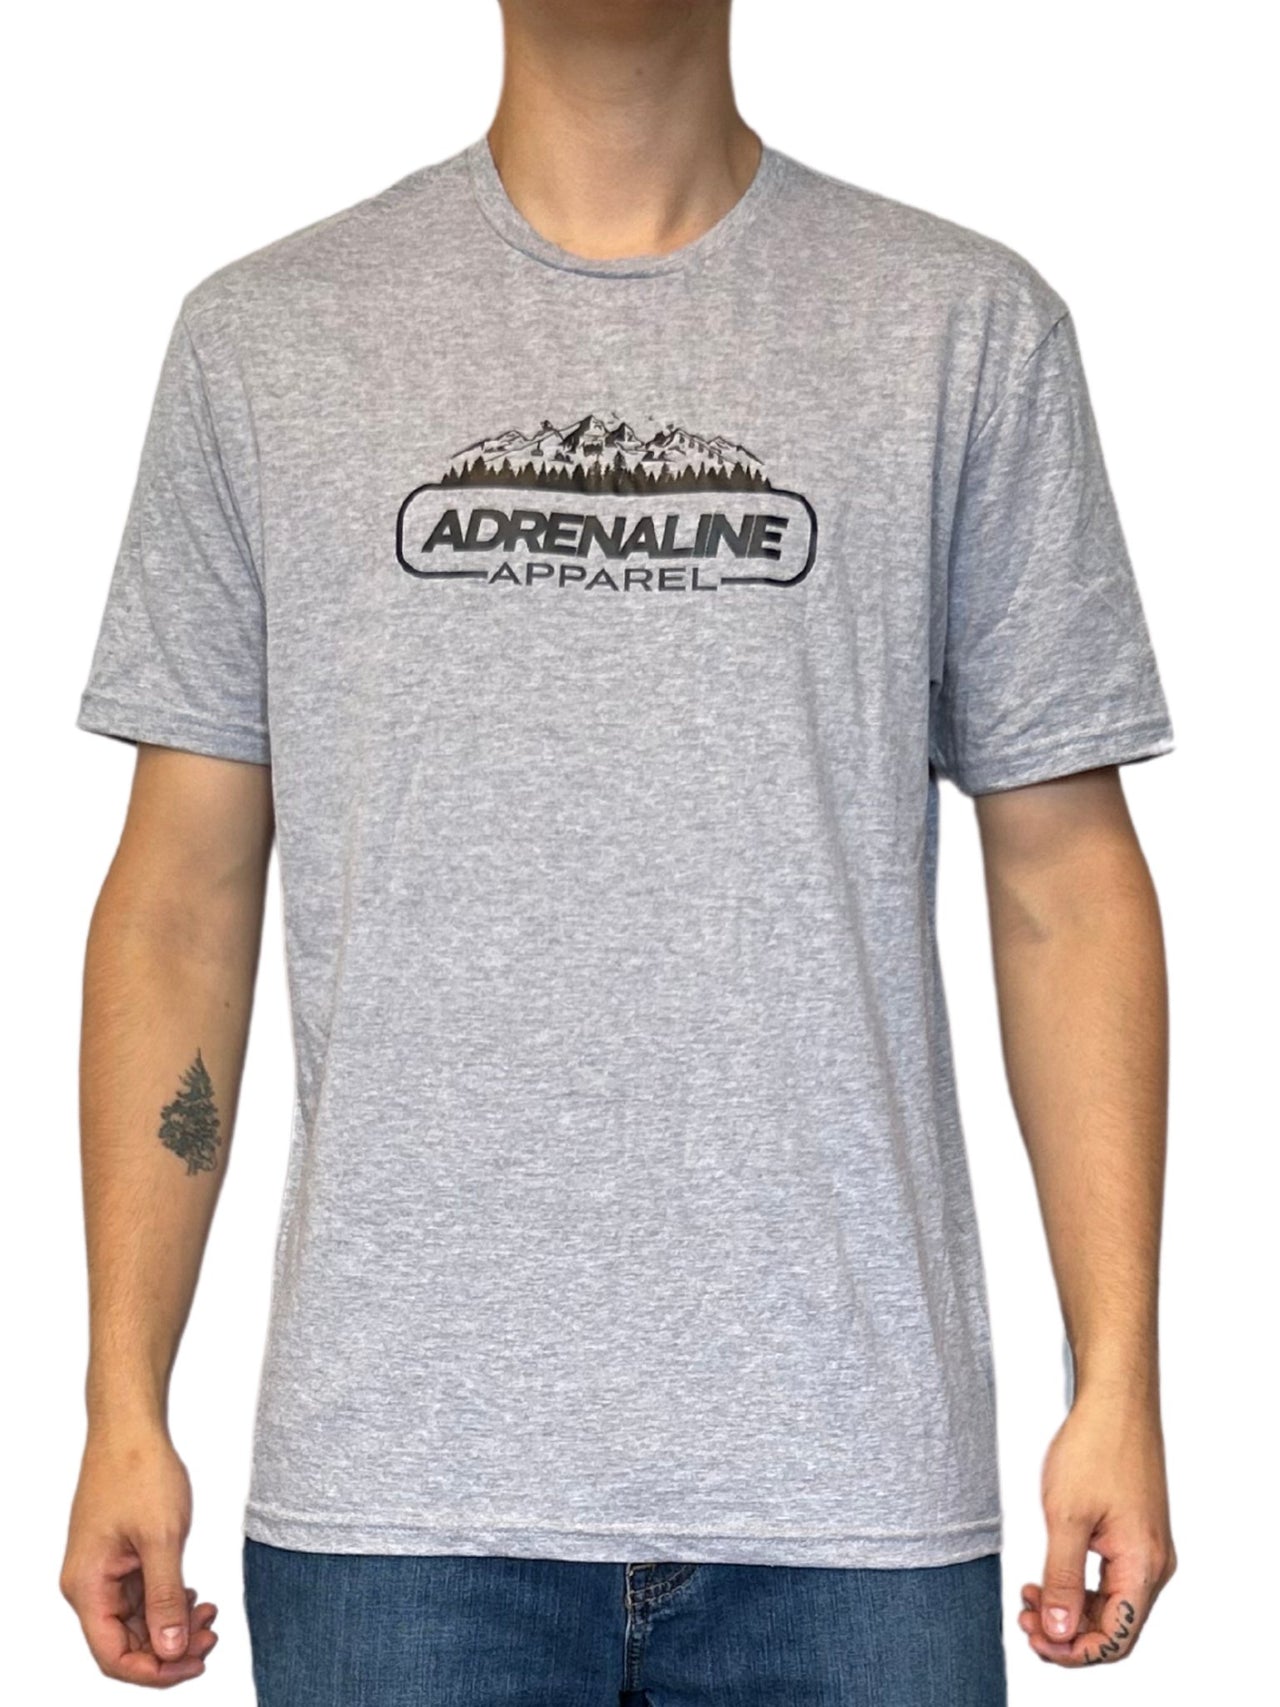 Ski Hill Adrenaline tshirt - AdrenalineApparel